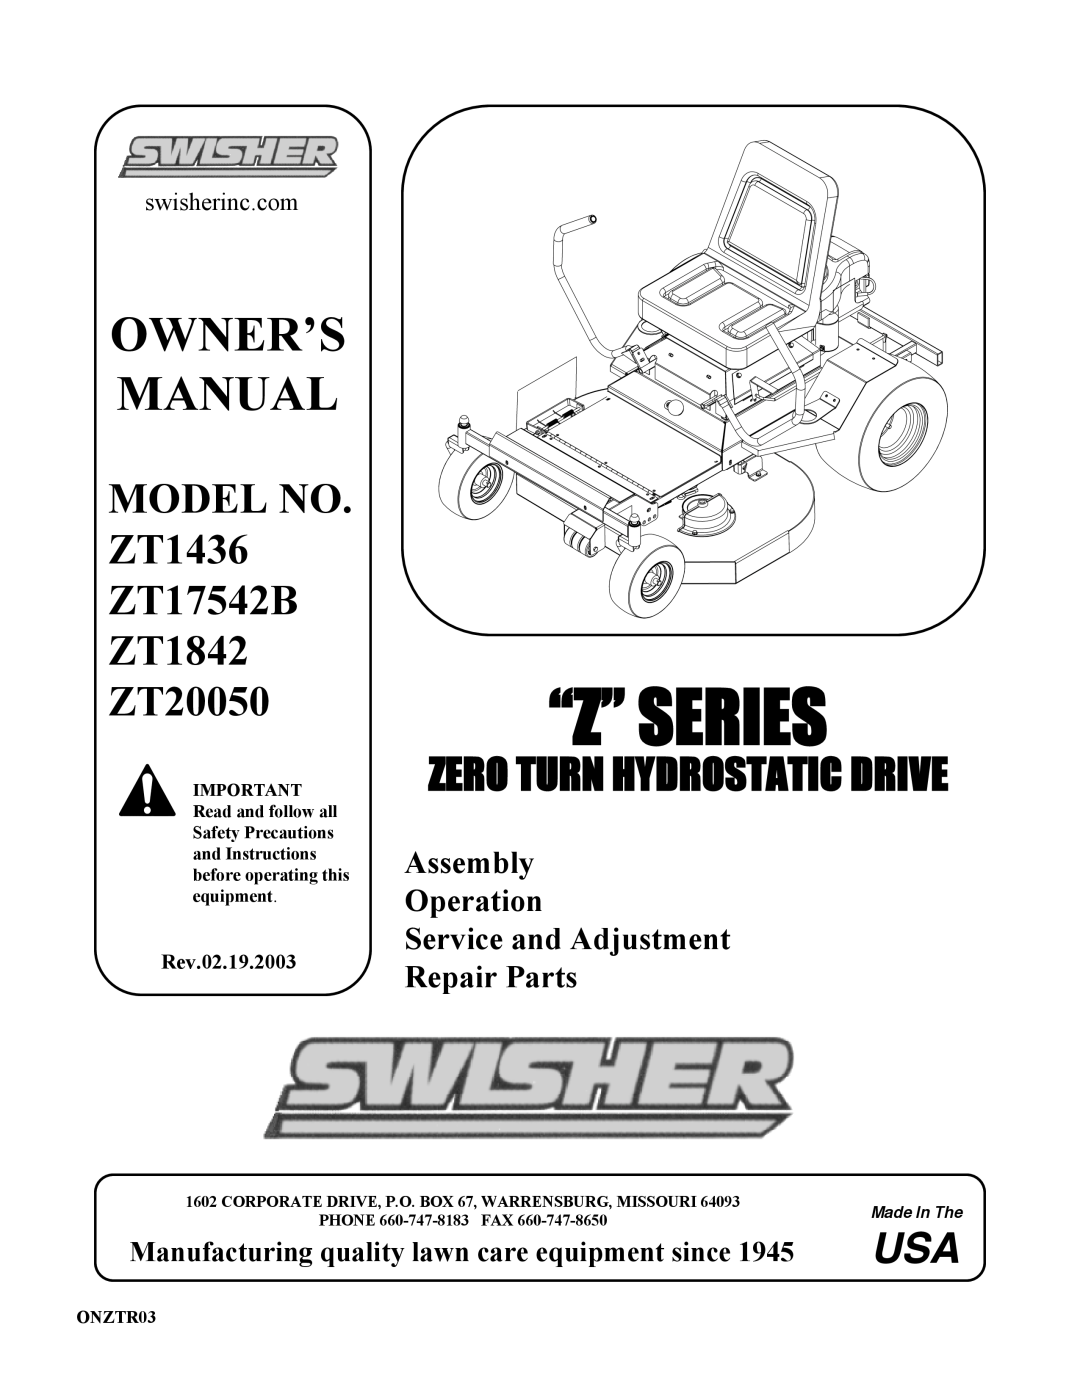 Swisher manual “Z” Series, MODEL NO. ZT1436 ZT17542B ZT1842 ZT20050, Manufacturing quality lawn care equipment since 